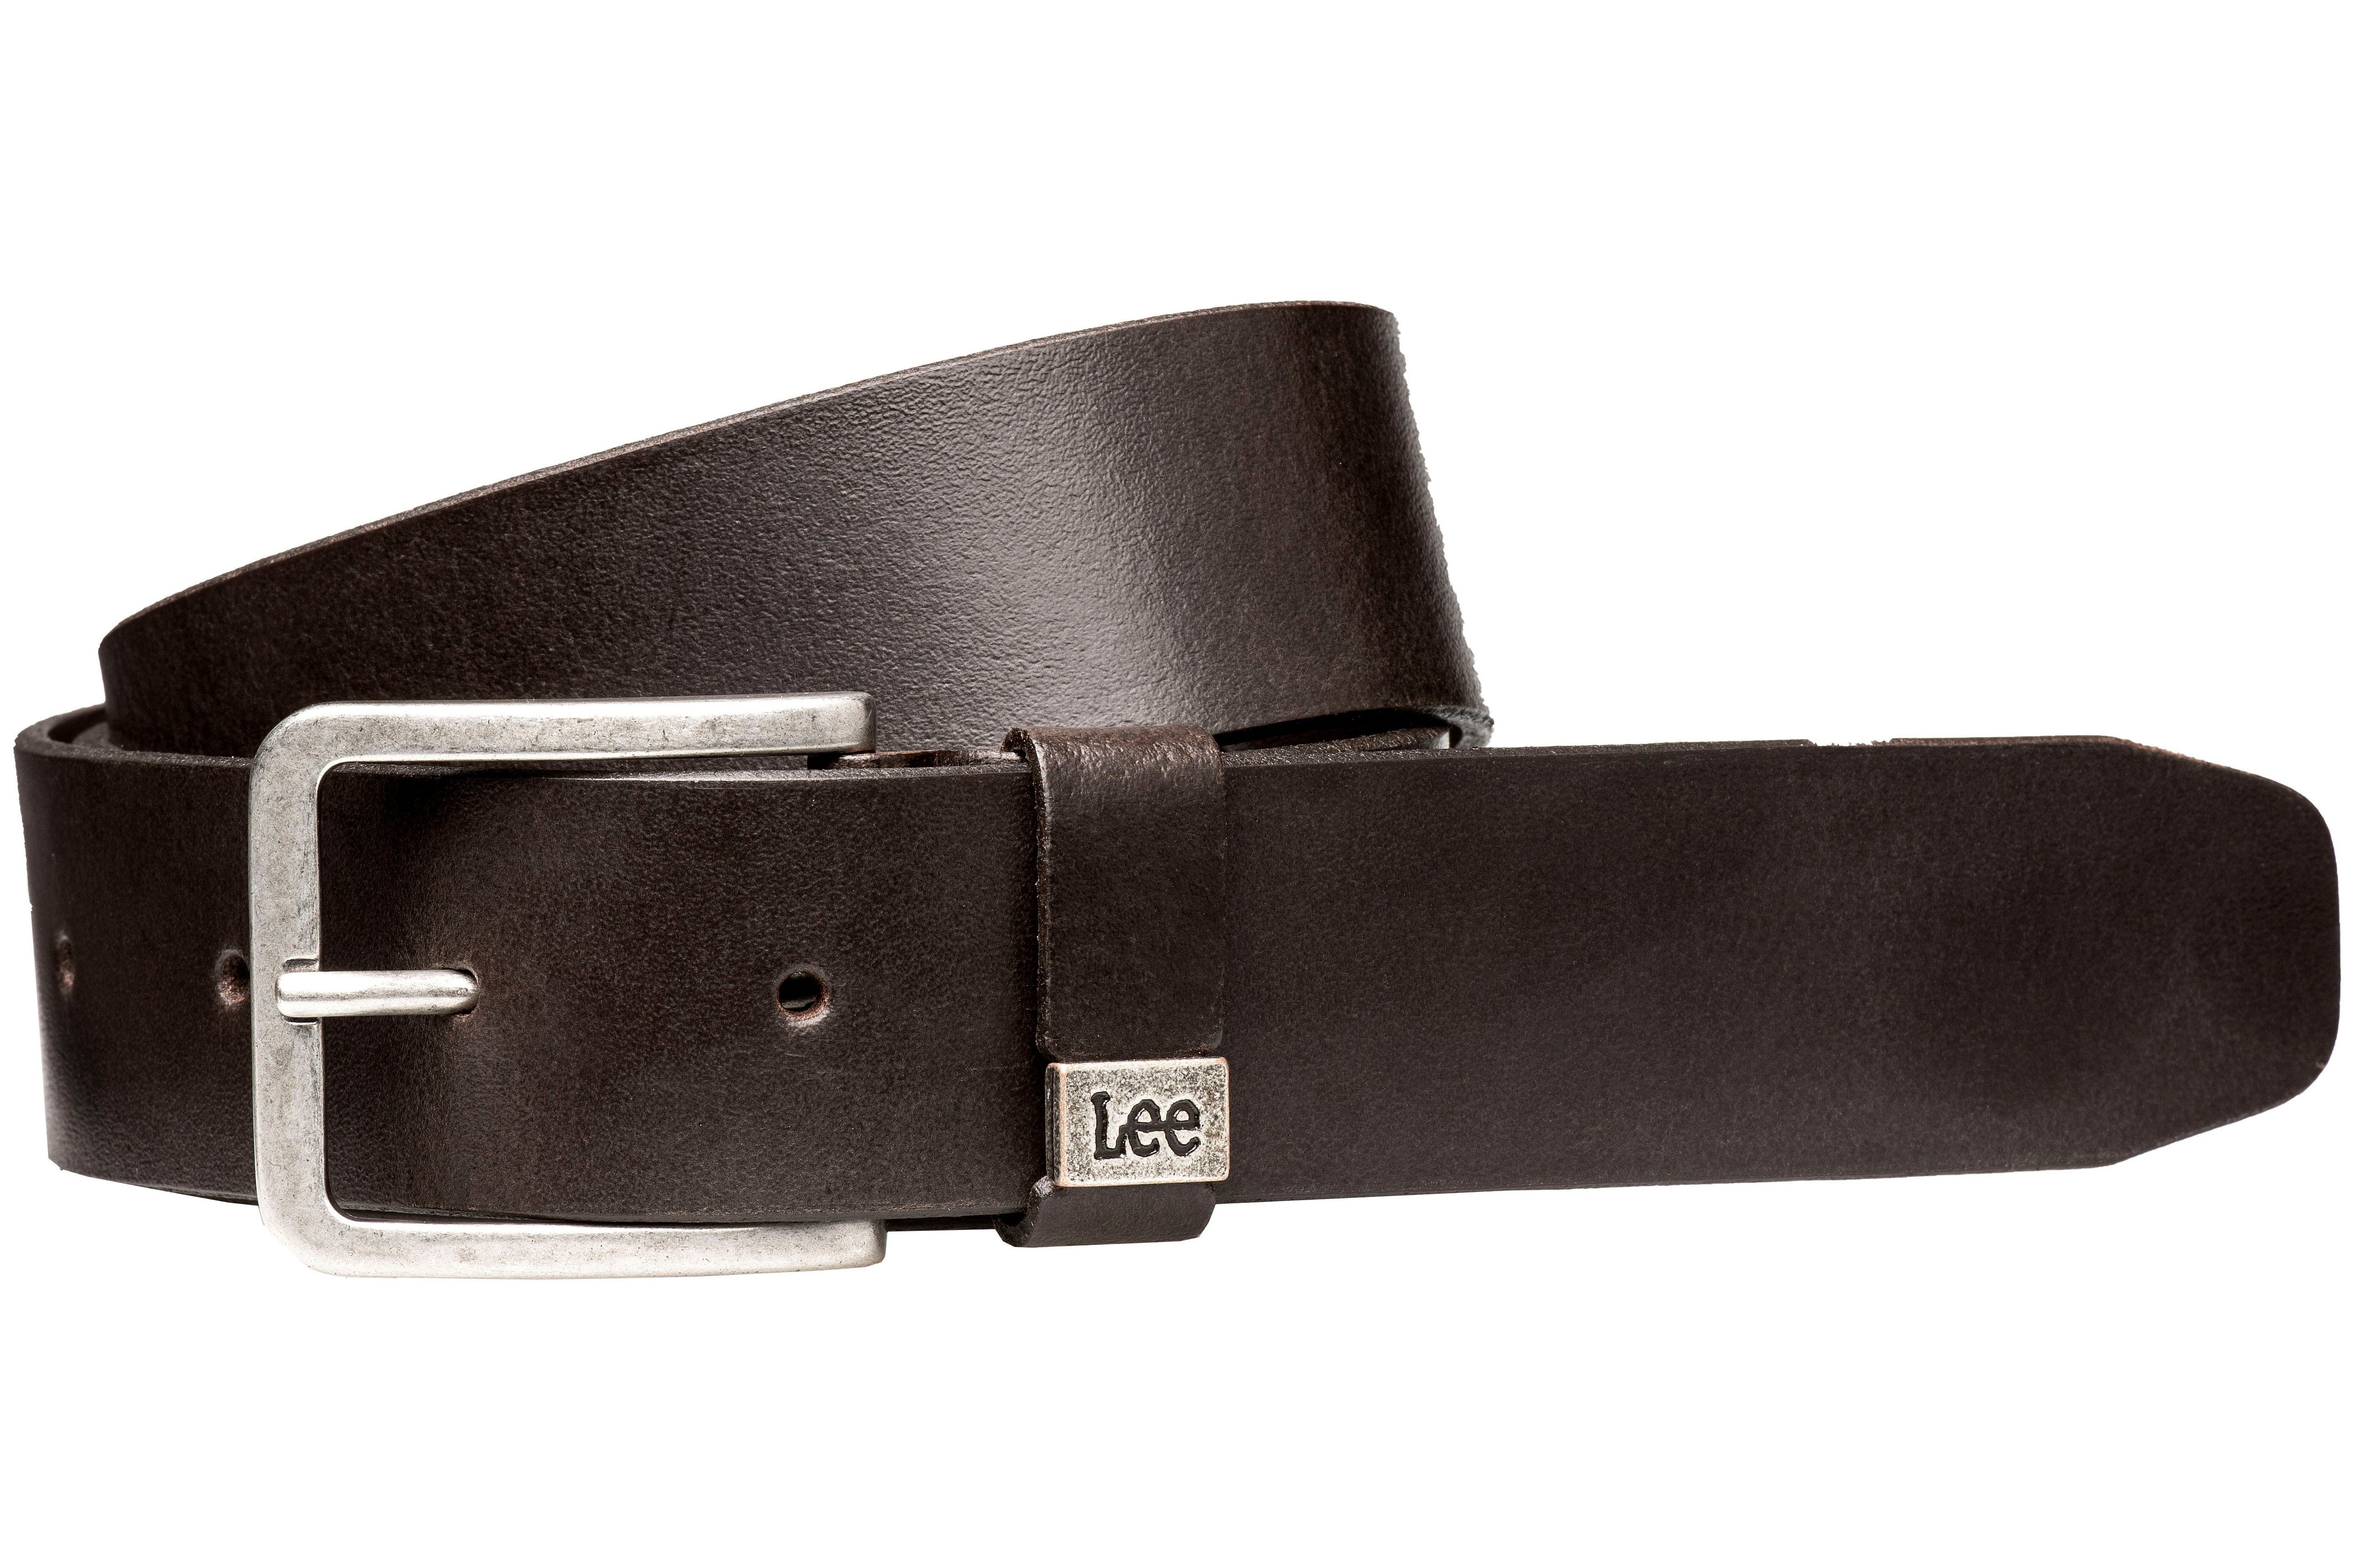 Lee® Ledergürtel SMALL LOGO dark brown | Gürtel